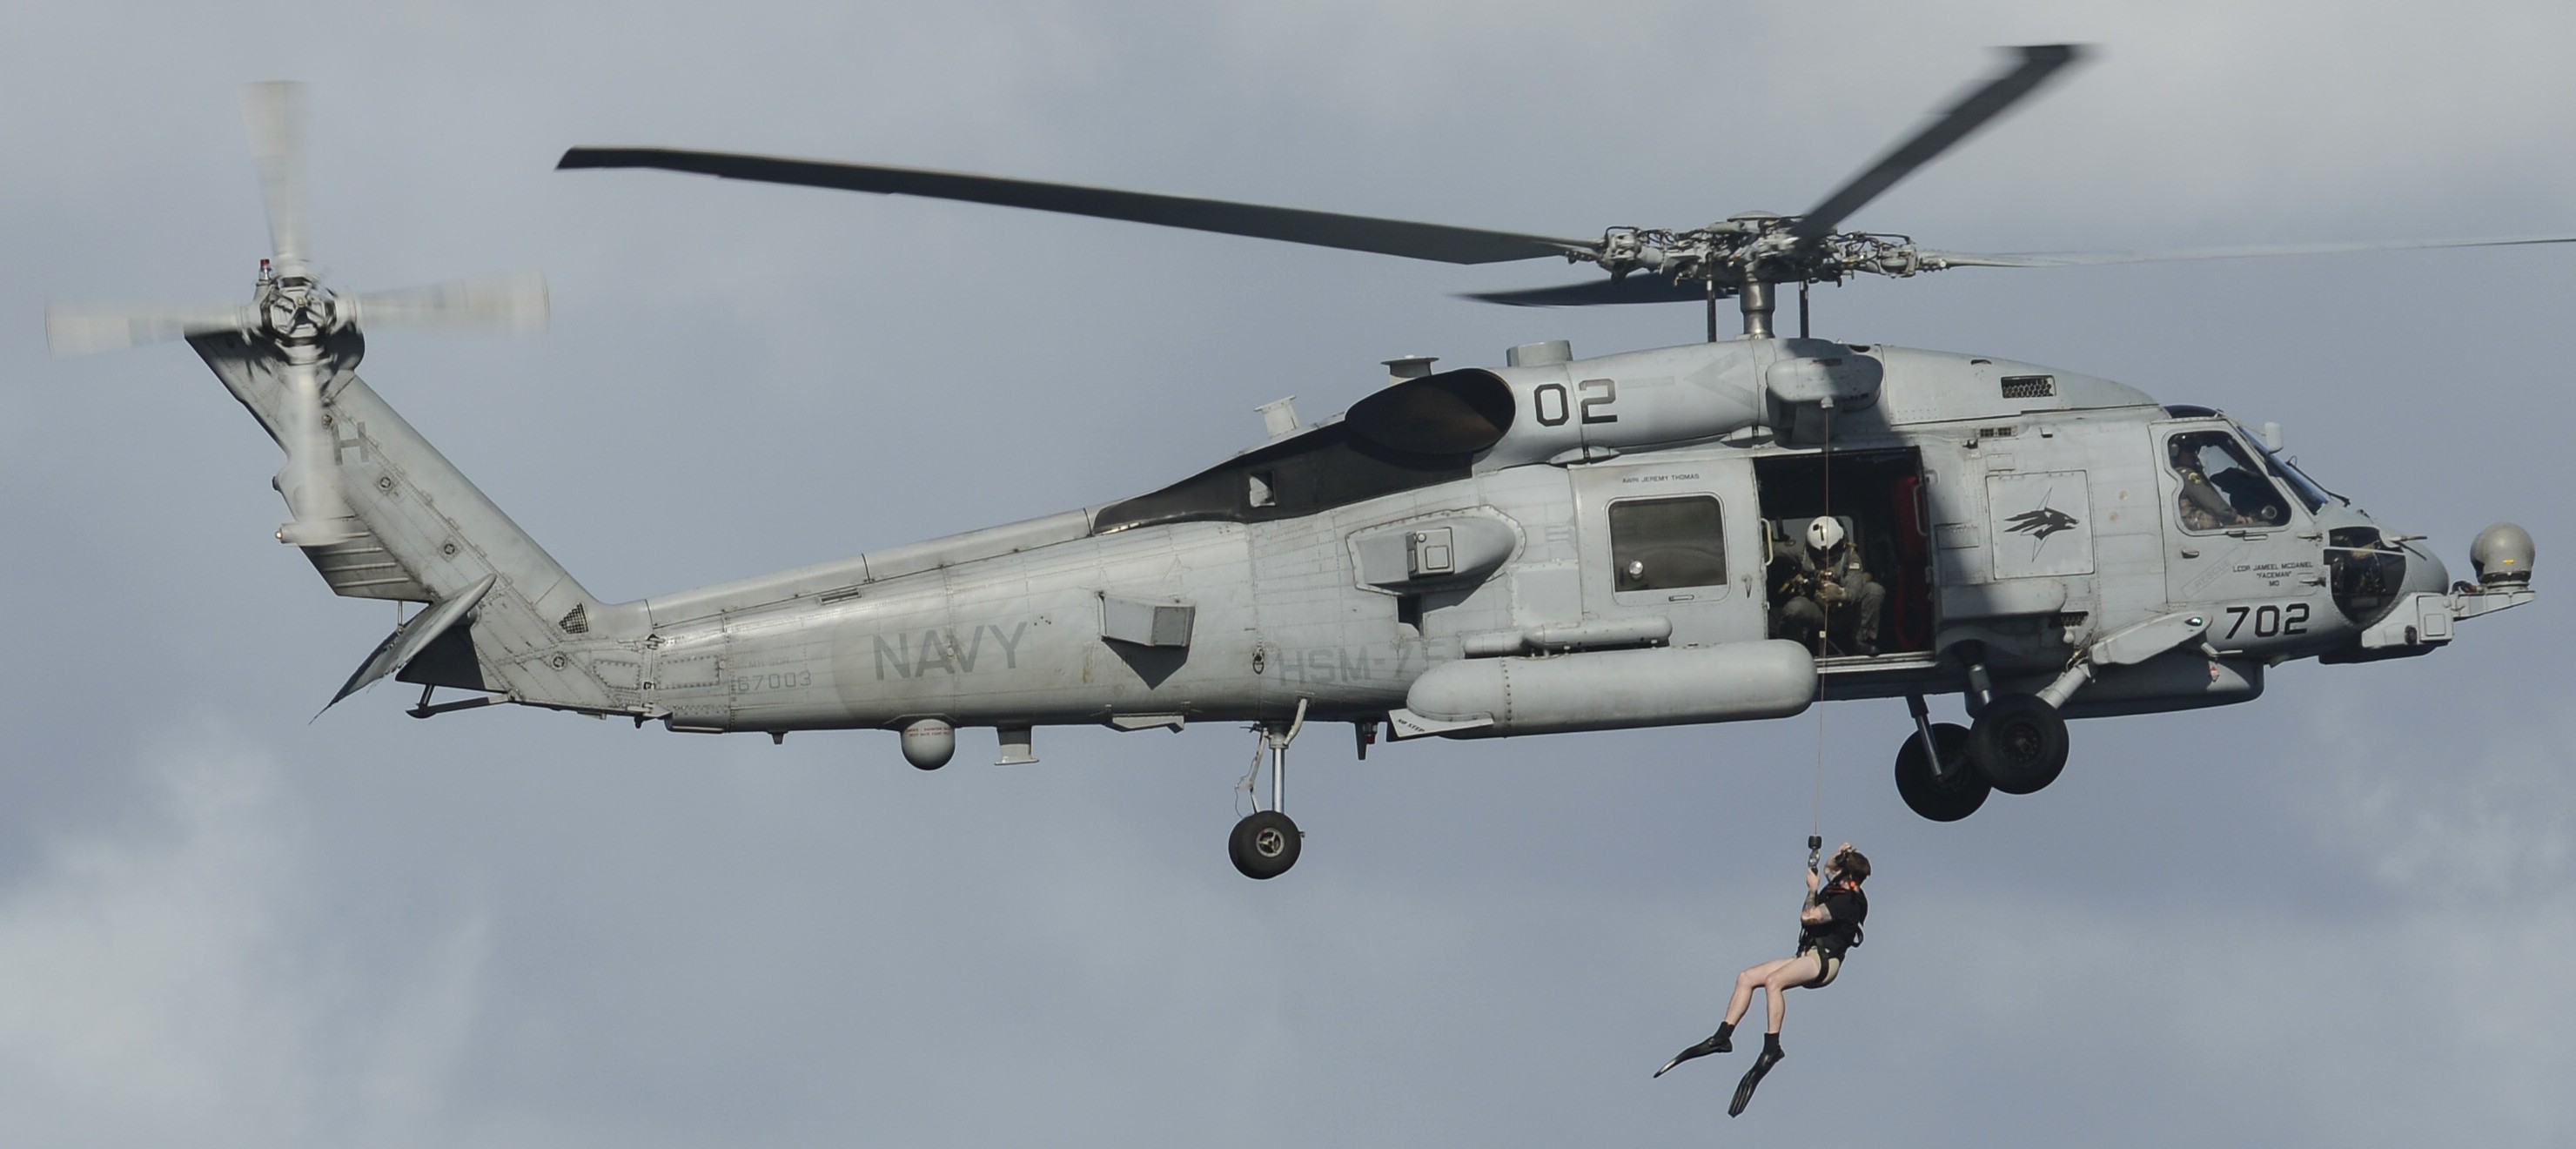 hsm-75 wolfpack helicopter maritime strike squadron us navy mh-60r seahawk 2013 24 uss nimitz cvn-68 cvw-11